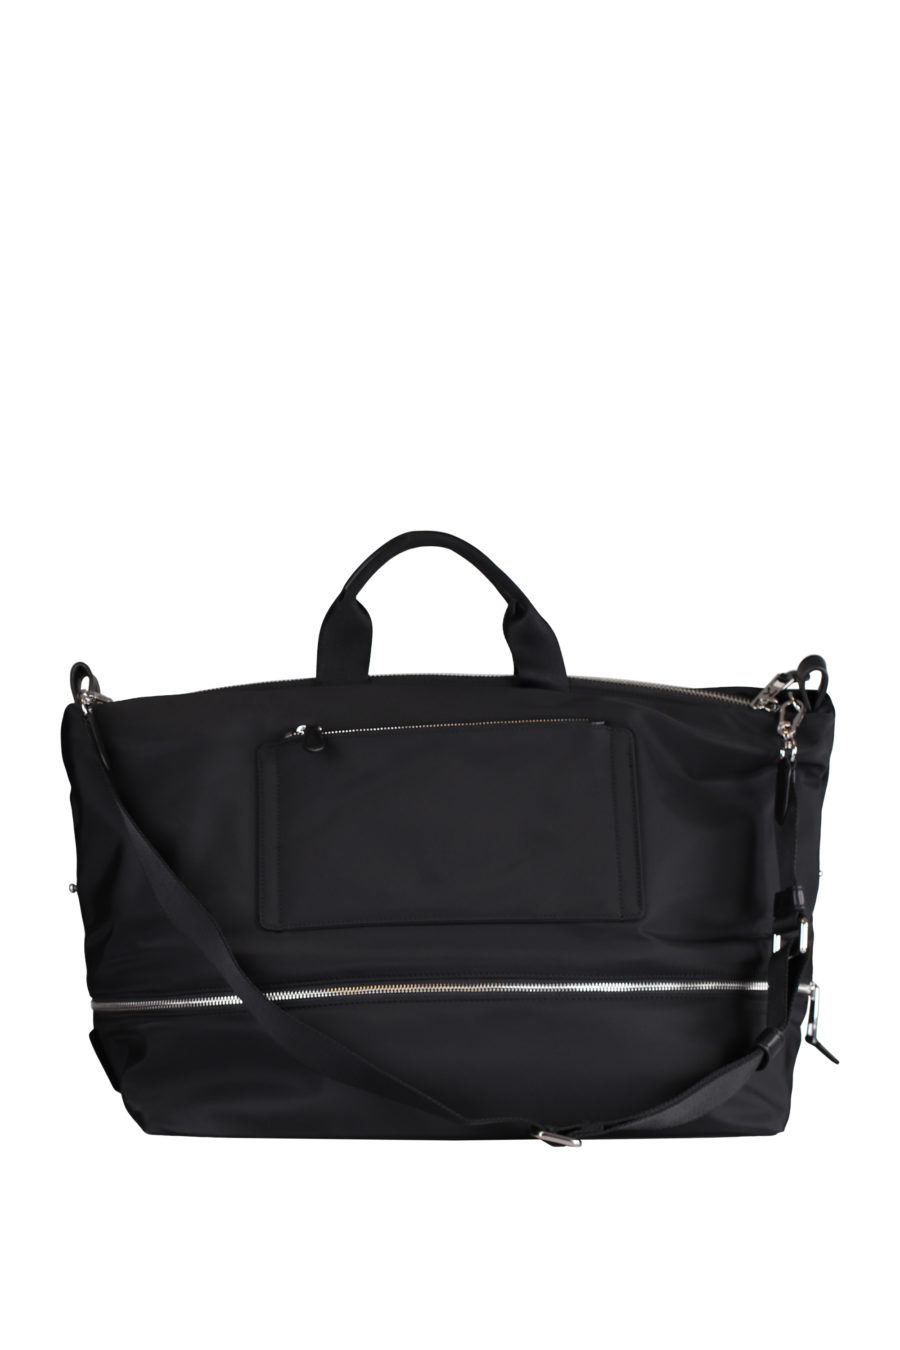 Black travel bag with "Karl" - IMG 9795